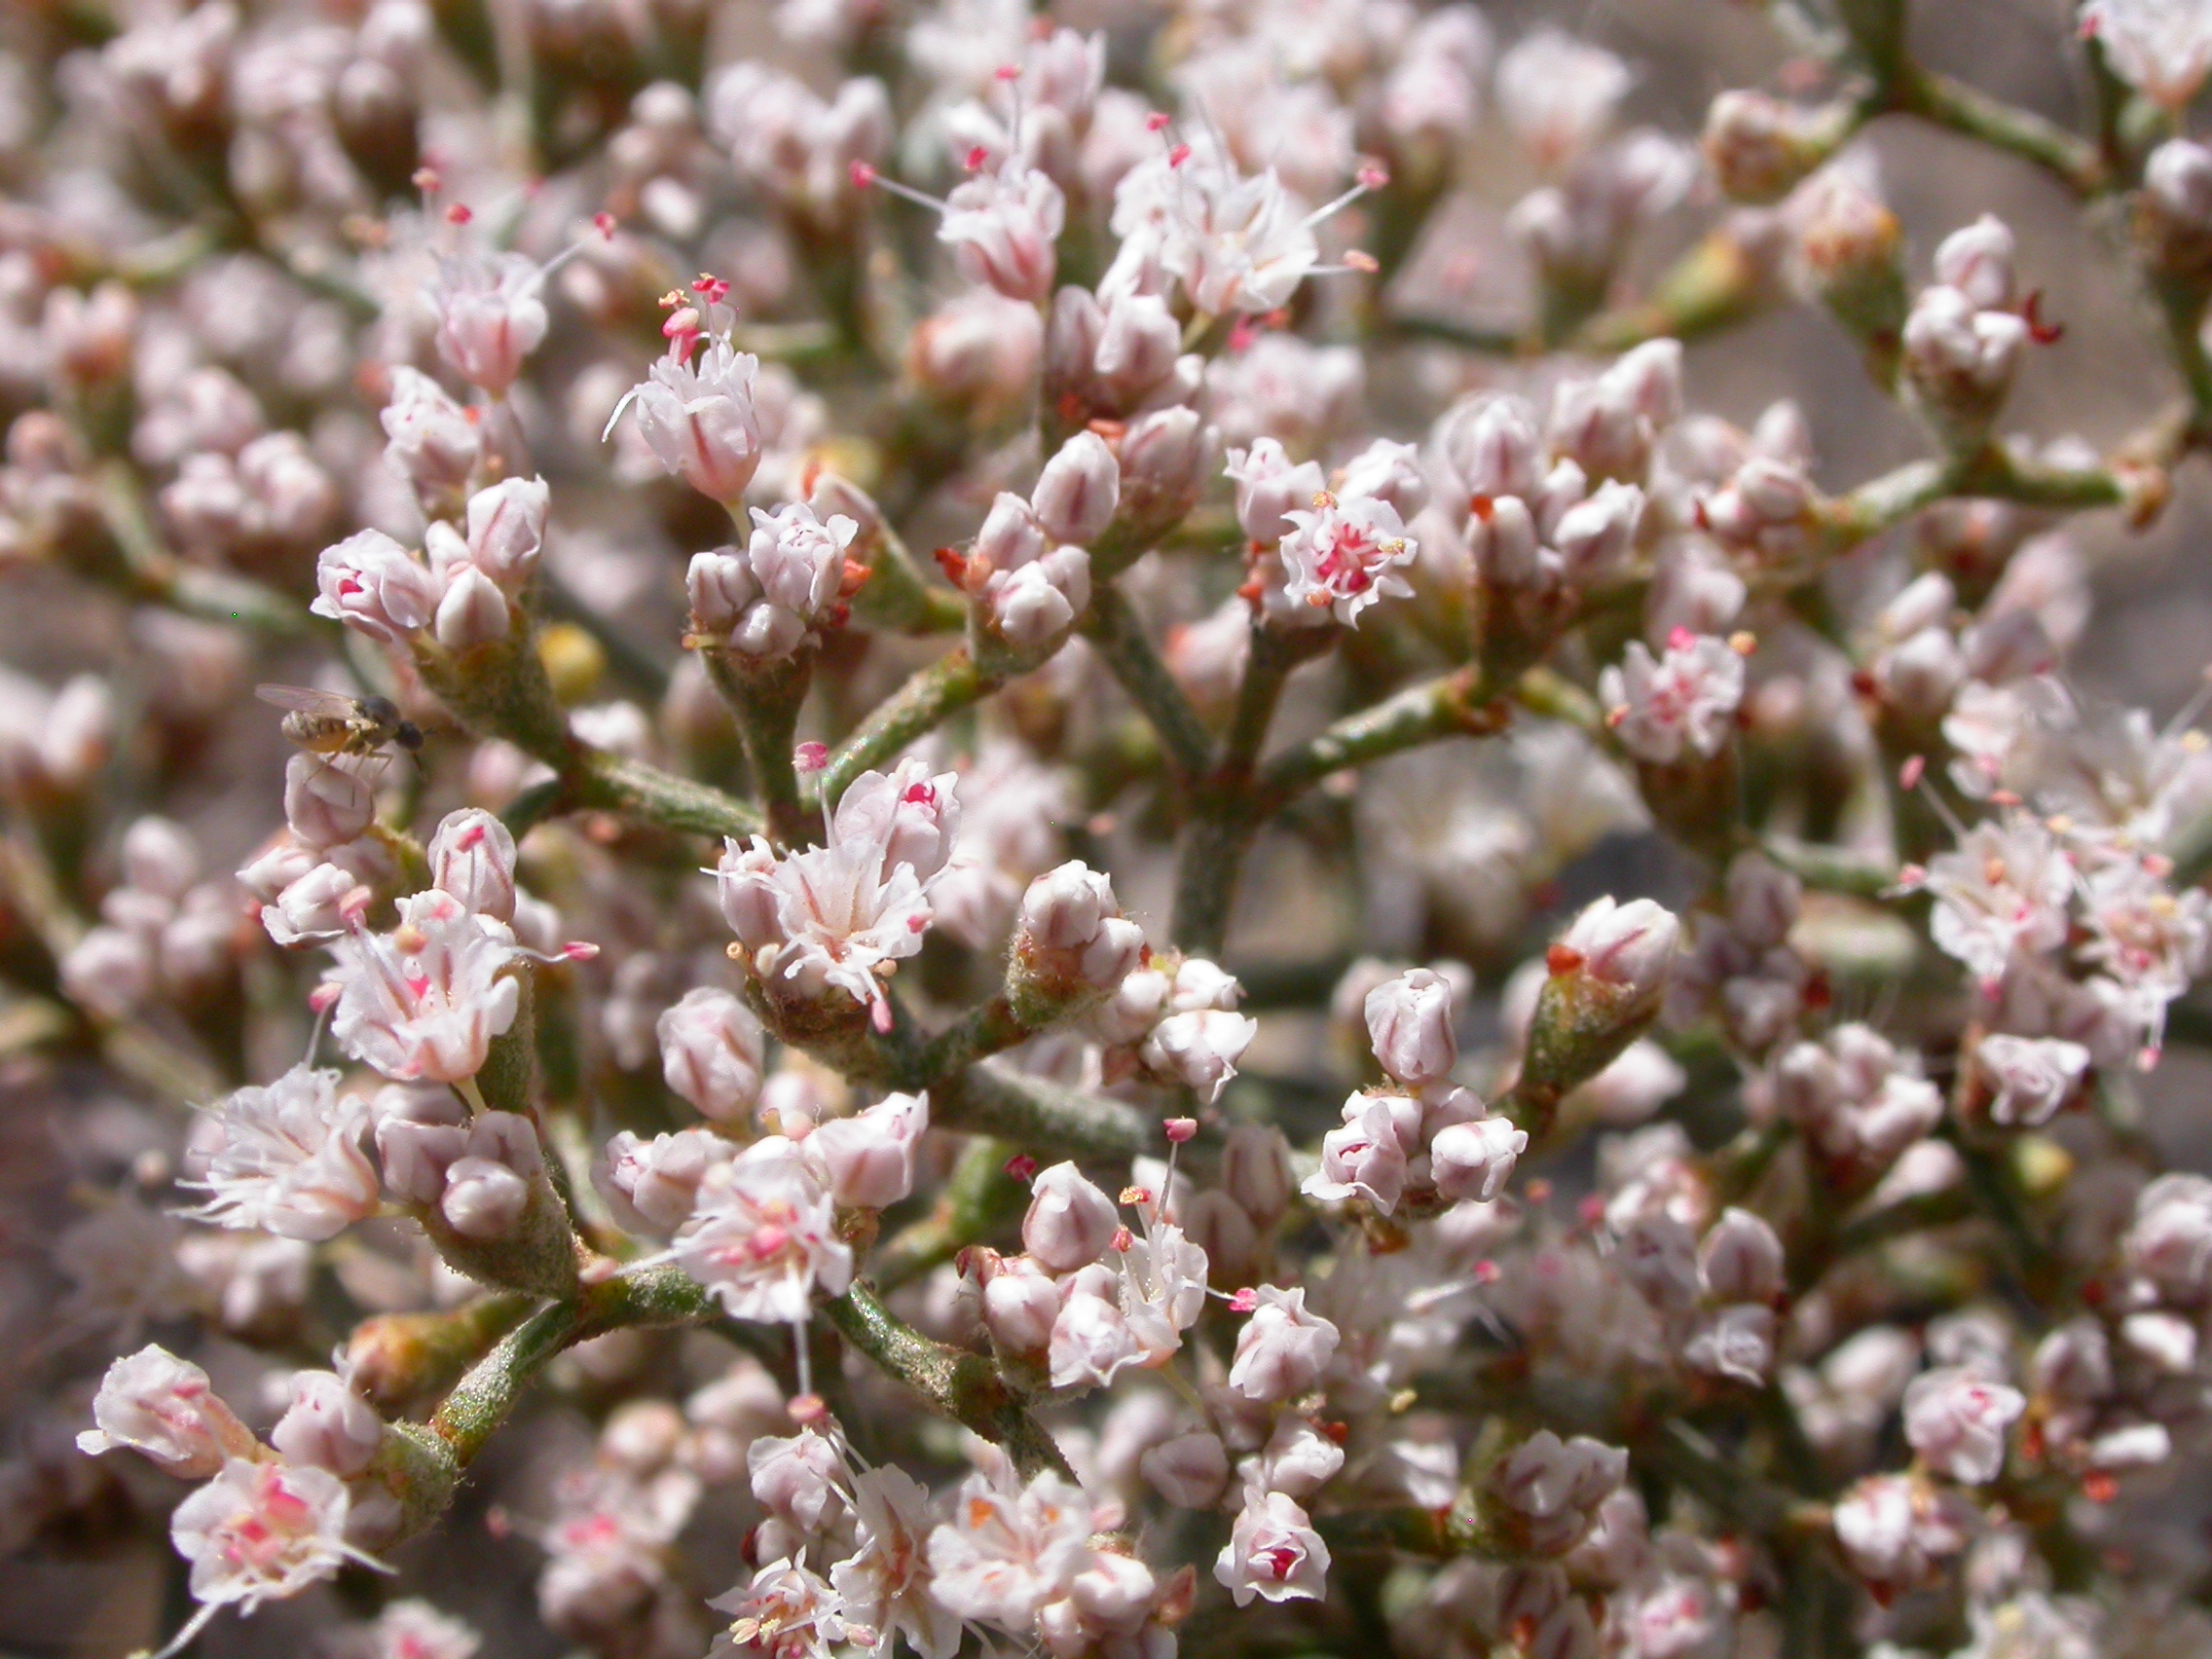 White and pink flowers of Eriogonum microthecum, slender buckwheat